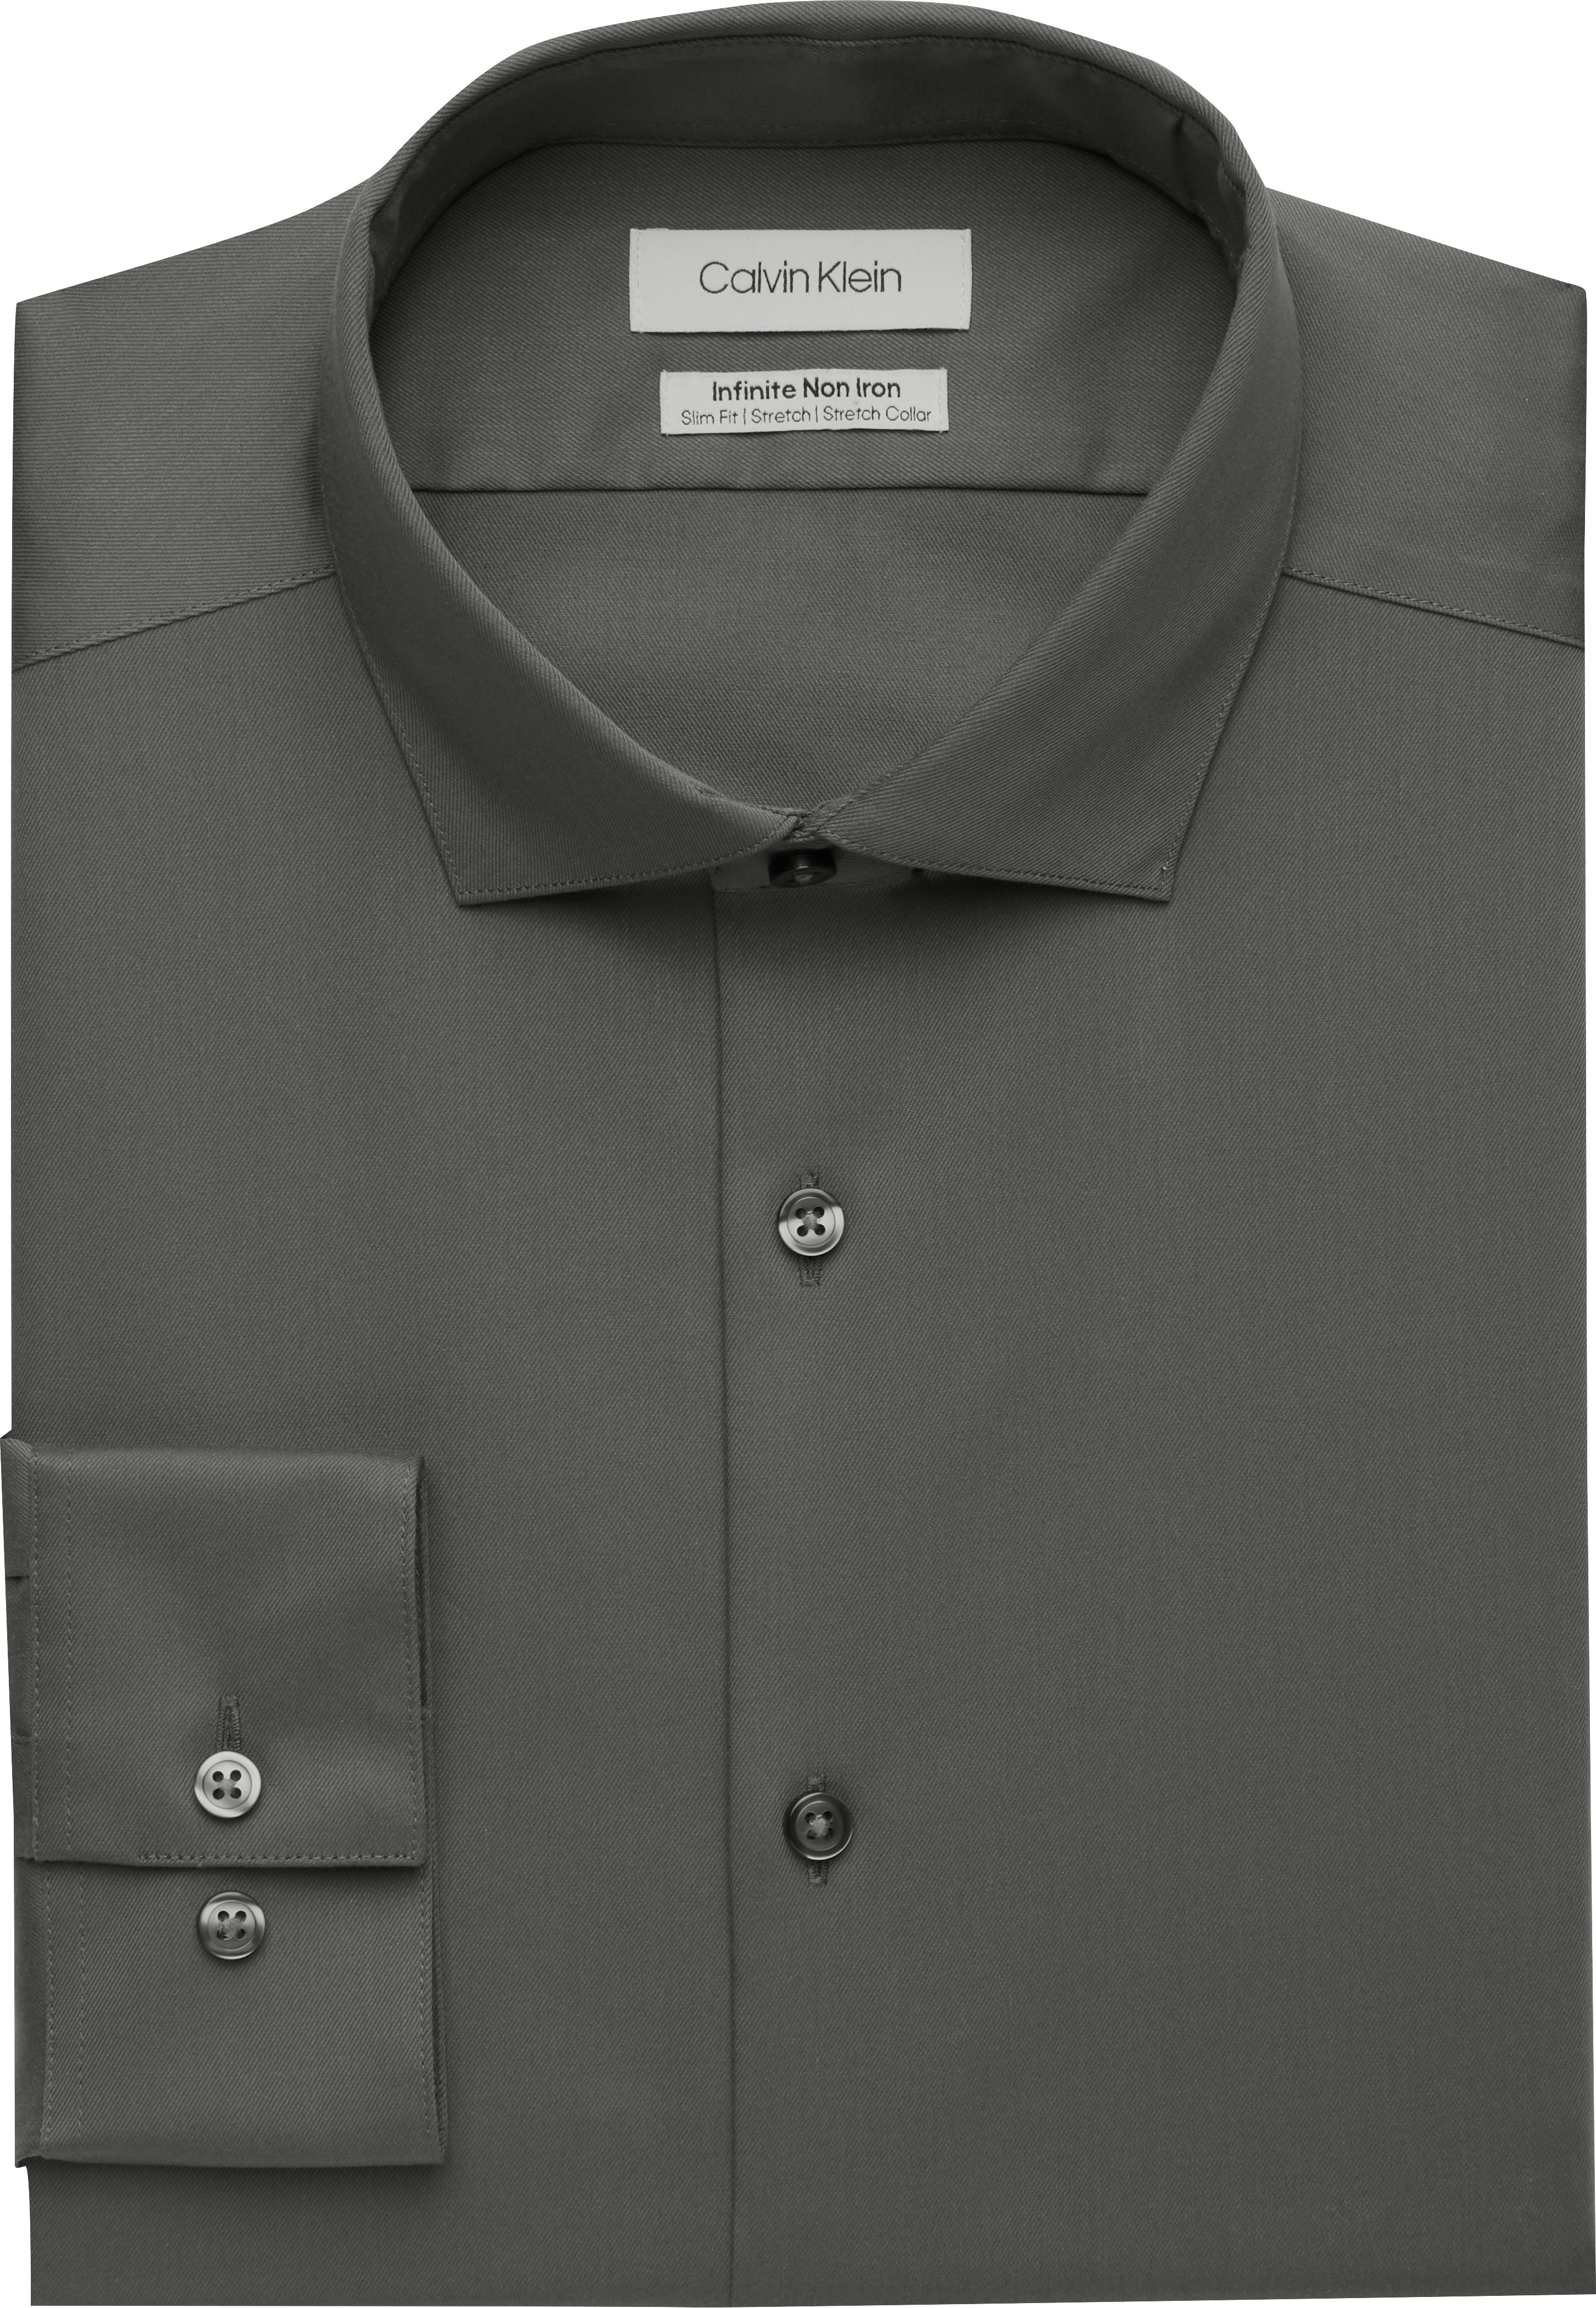 Gray Dress Shirts | Men's Wearhouse